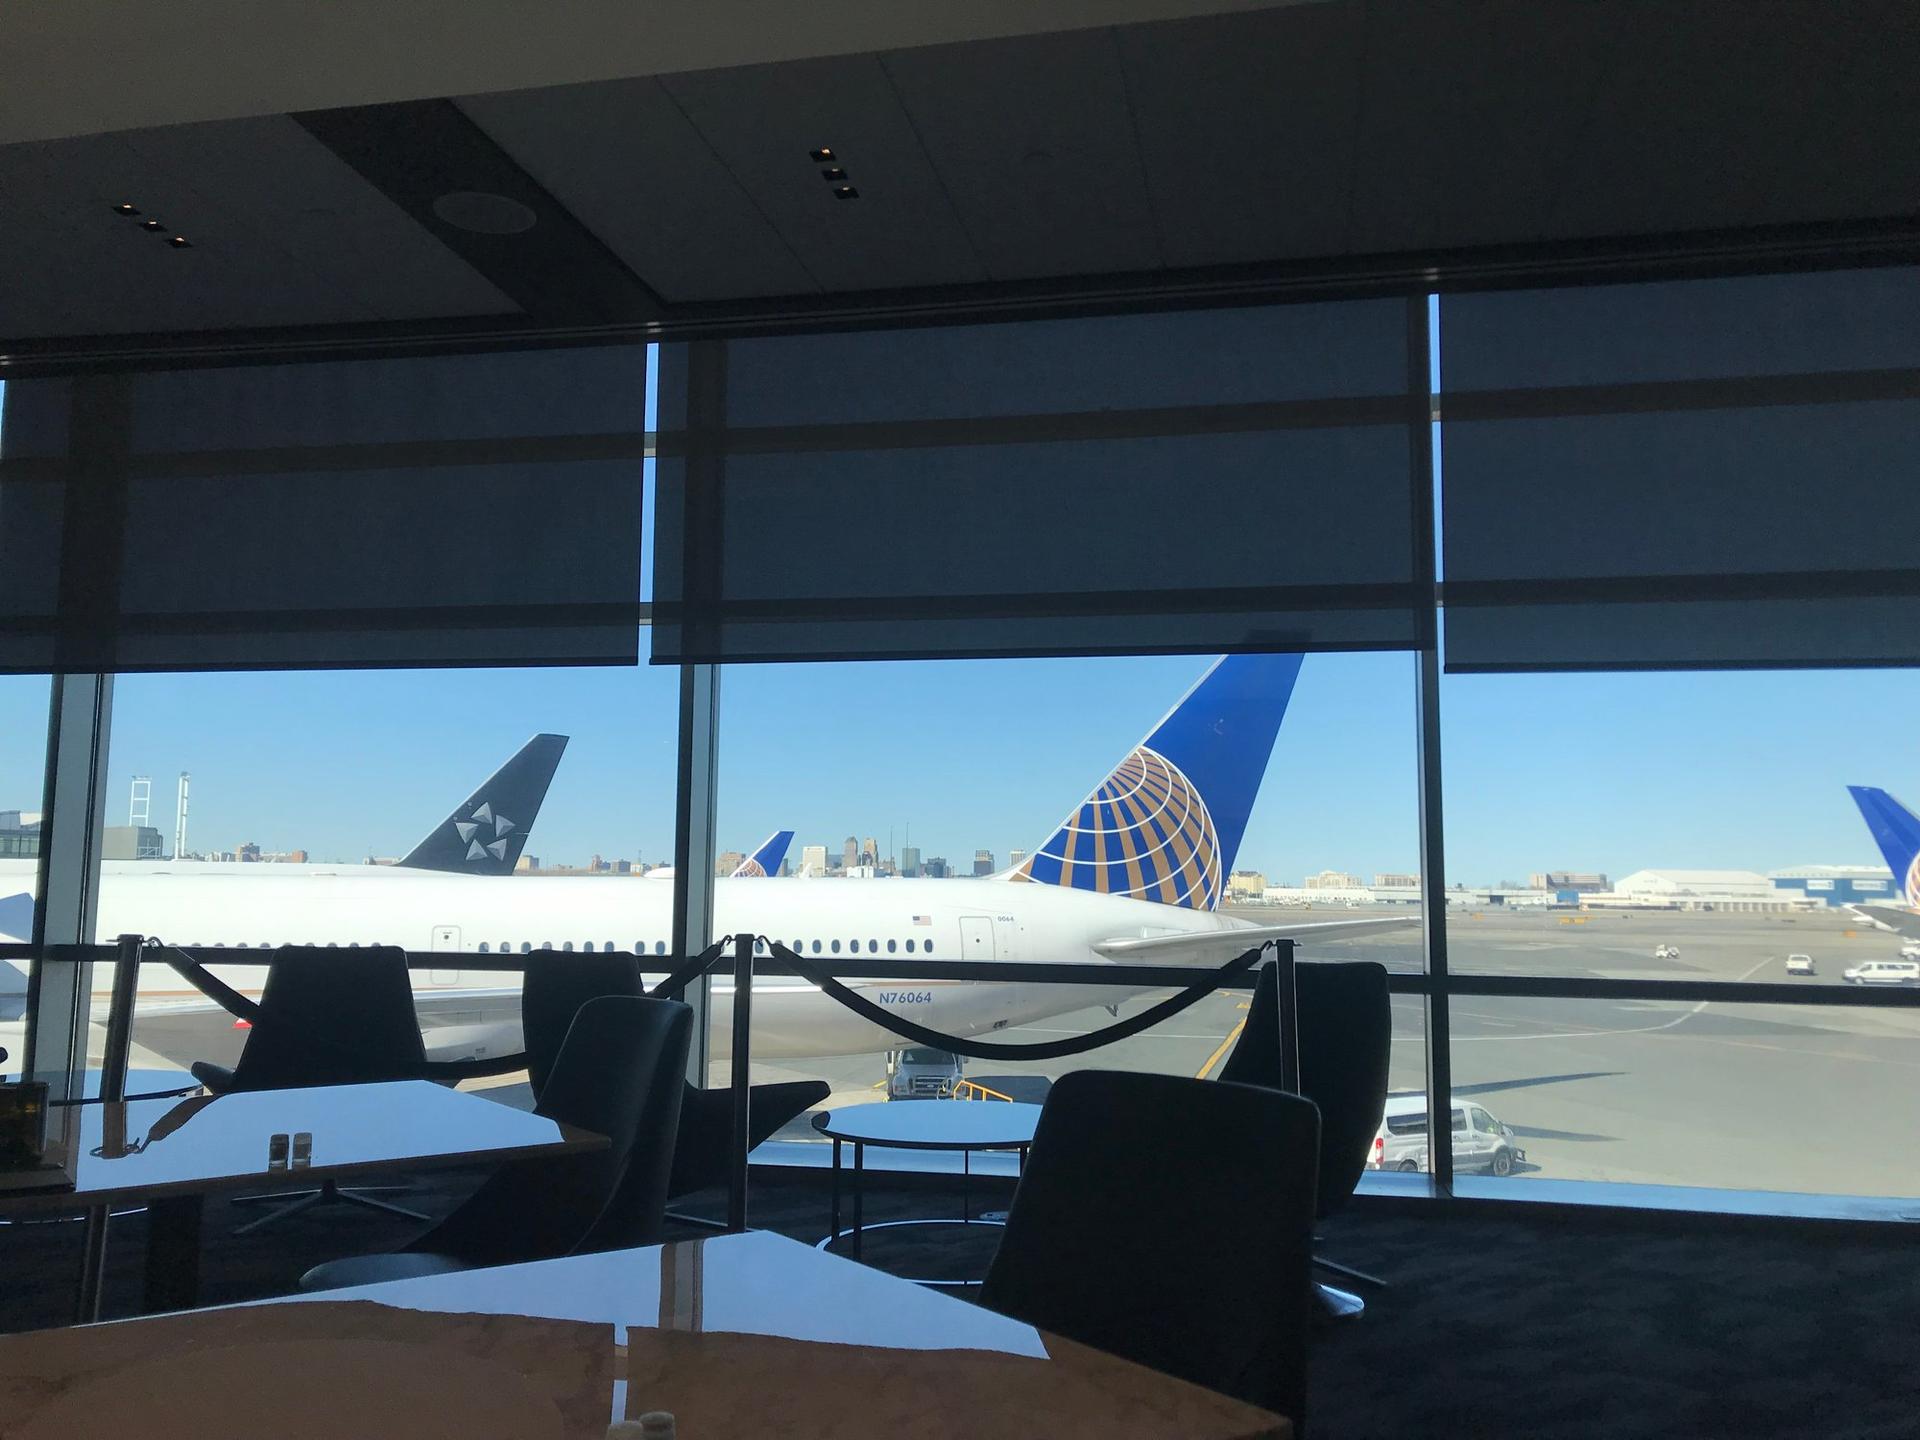 United Airlines Polaris Lounge image 9 of 13